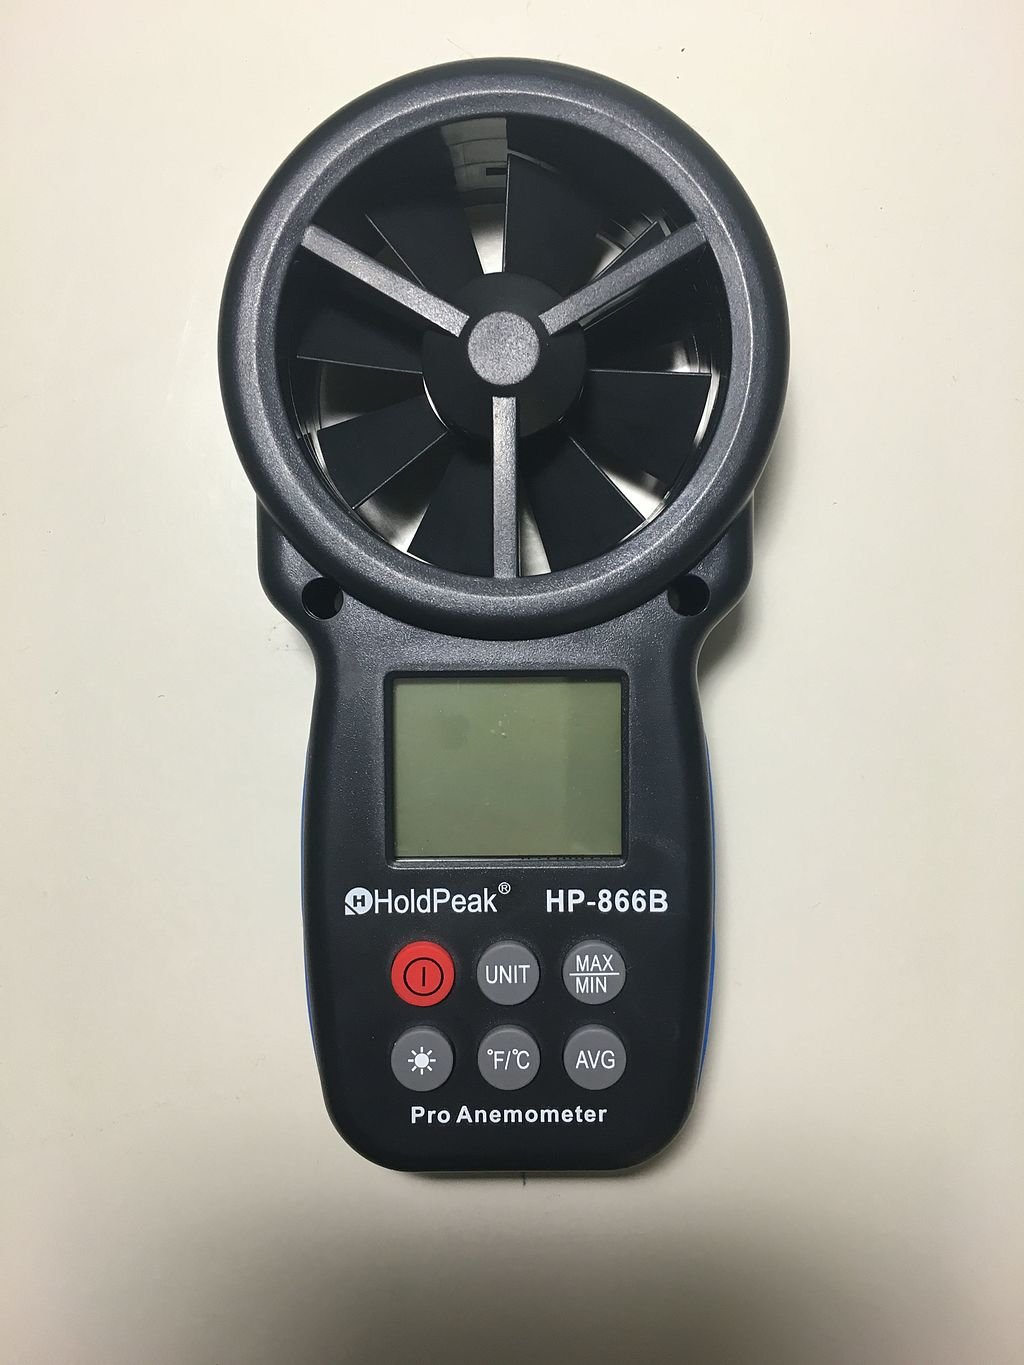 Digital Handheld Anemometer to calculate wind speed before installing home wind turbine